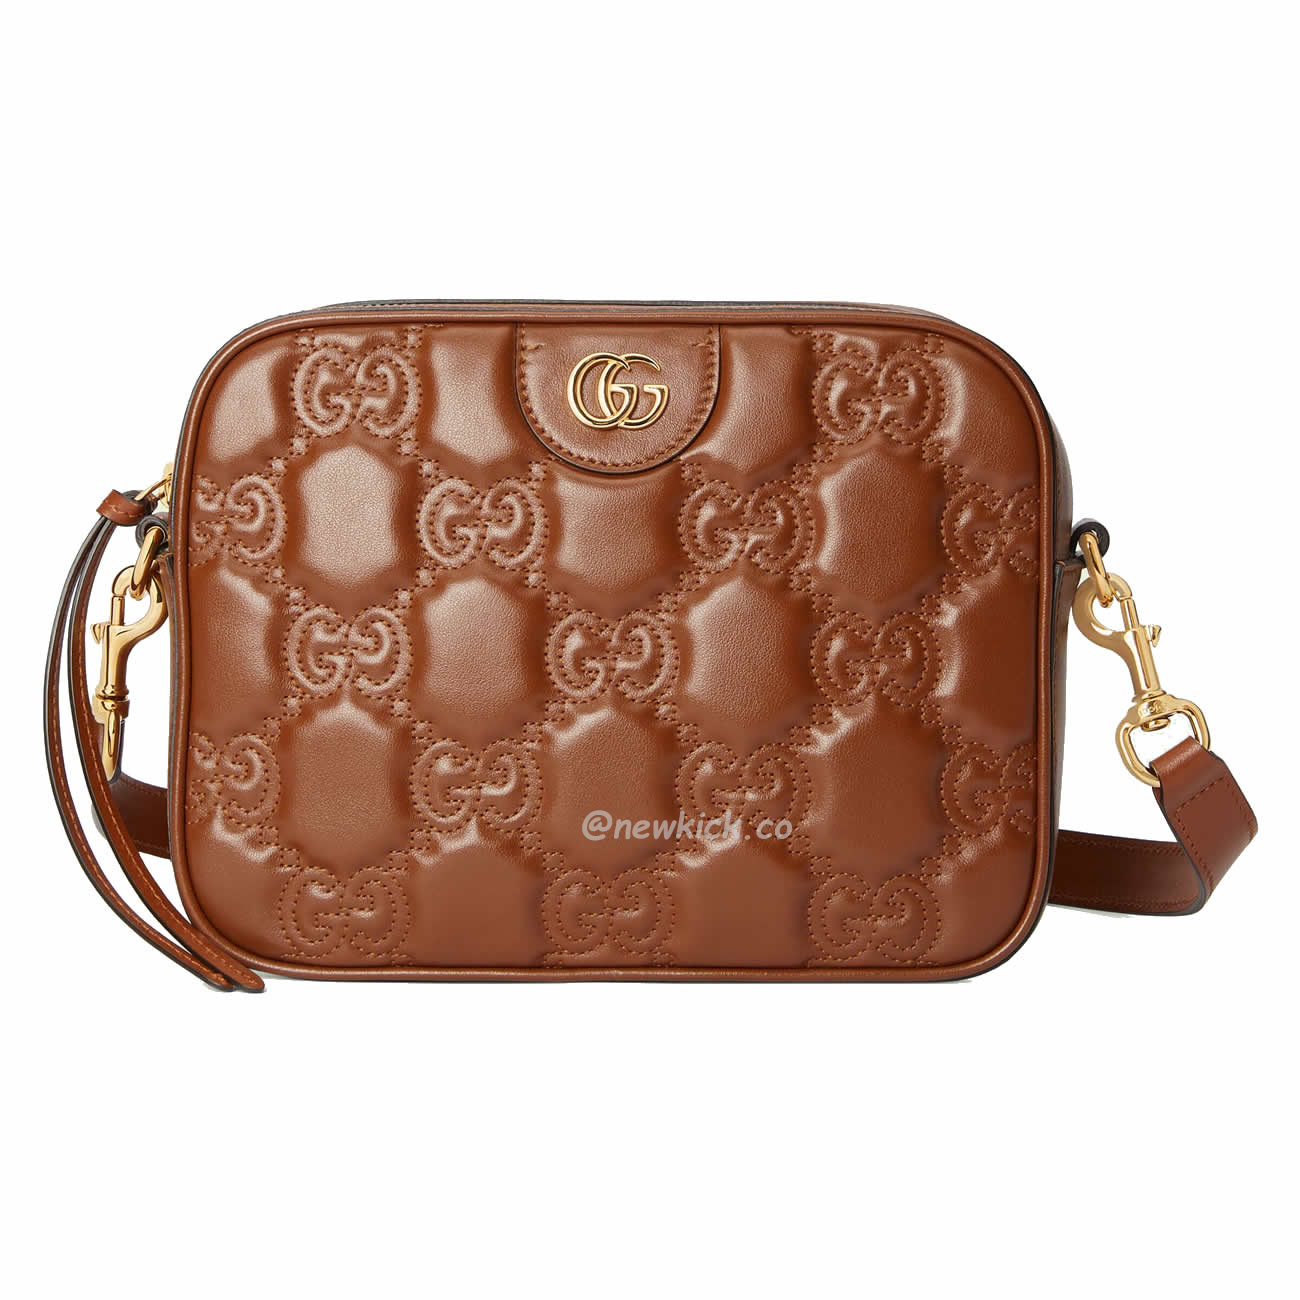 Gucci Gg Matelass Small Bag Product Details 702234 Um8hg 1046 (9) - newkick.org